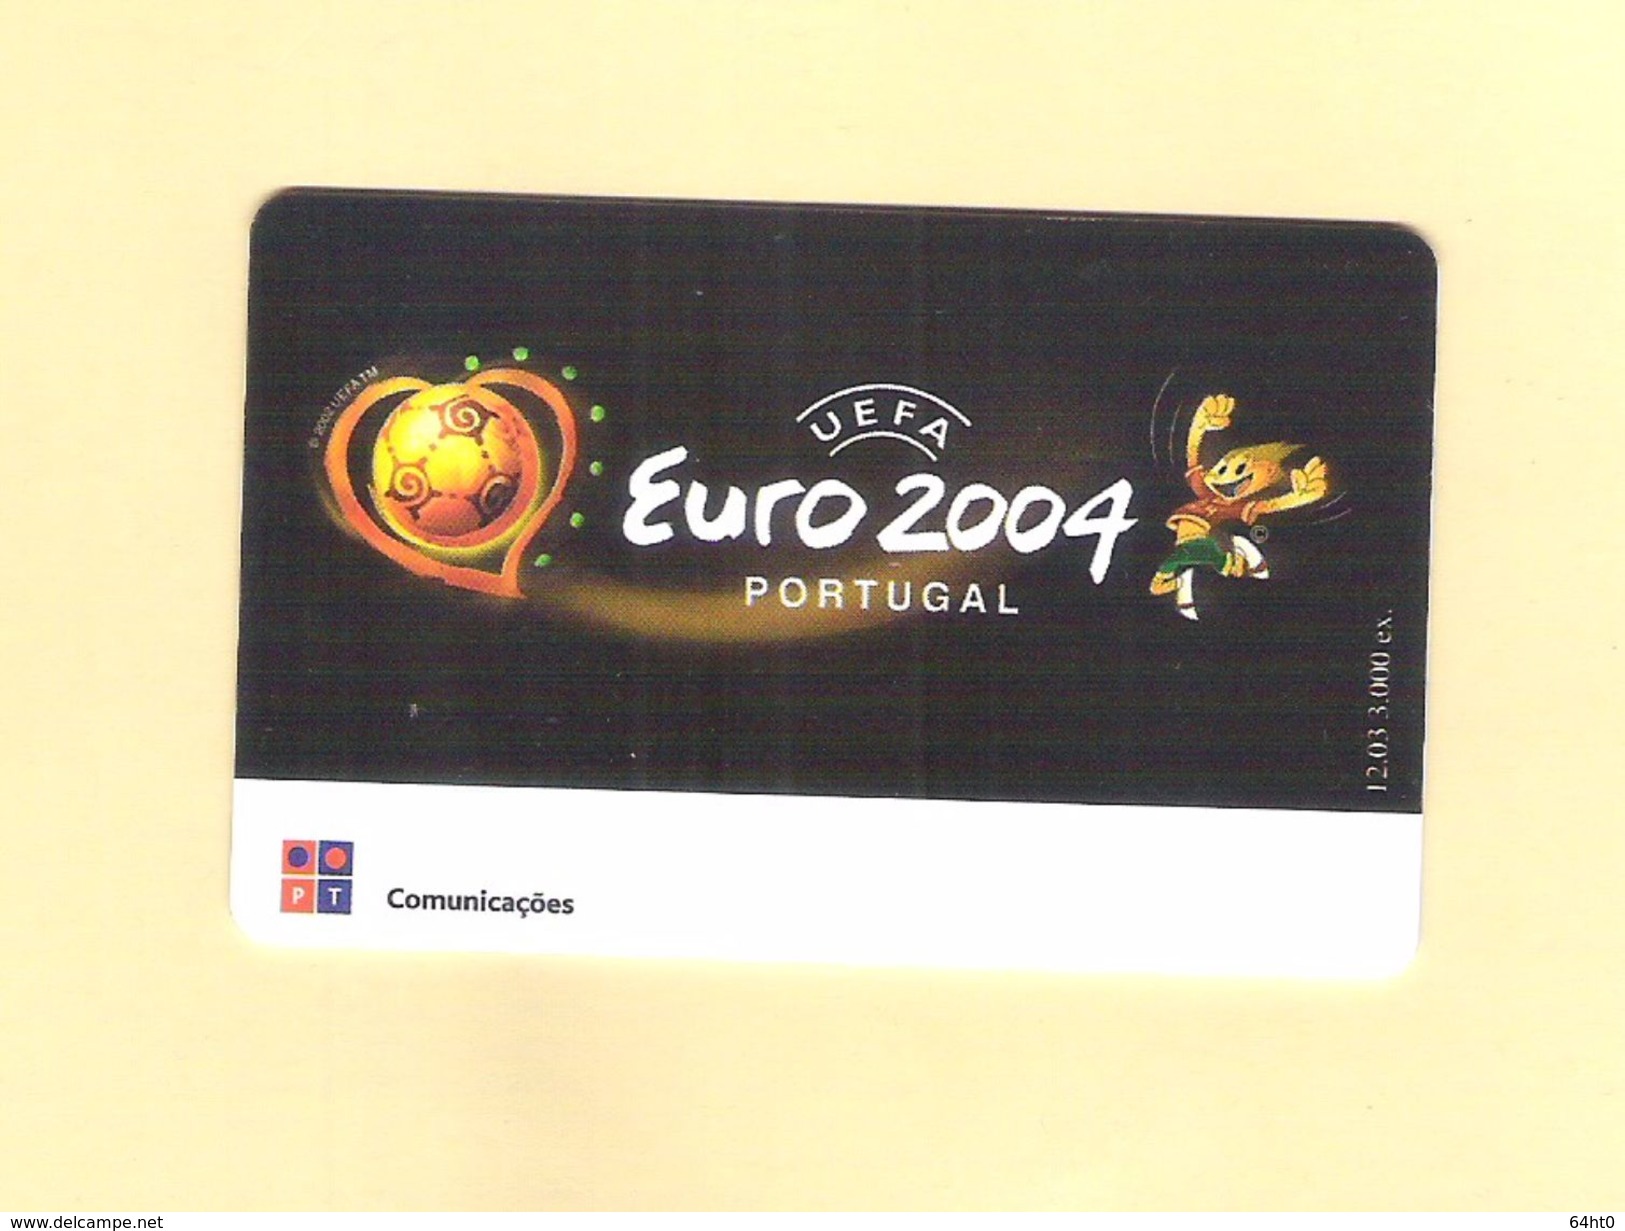 PHONECARD CHIP PORTUGAL "EURO 2004 - ESTÁDIO DA LUZ LISBOA" EX: 3.000 - USE AS ON PHOTO - Portugal